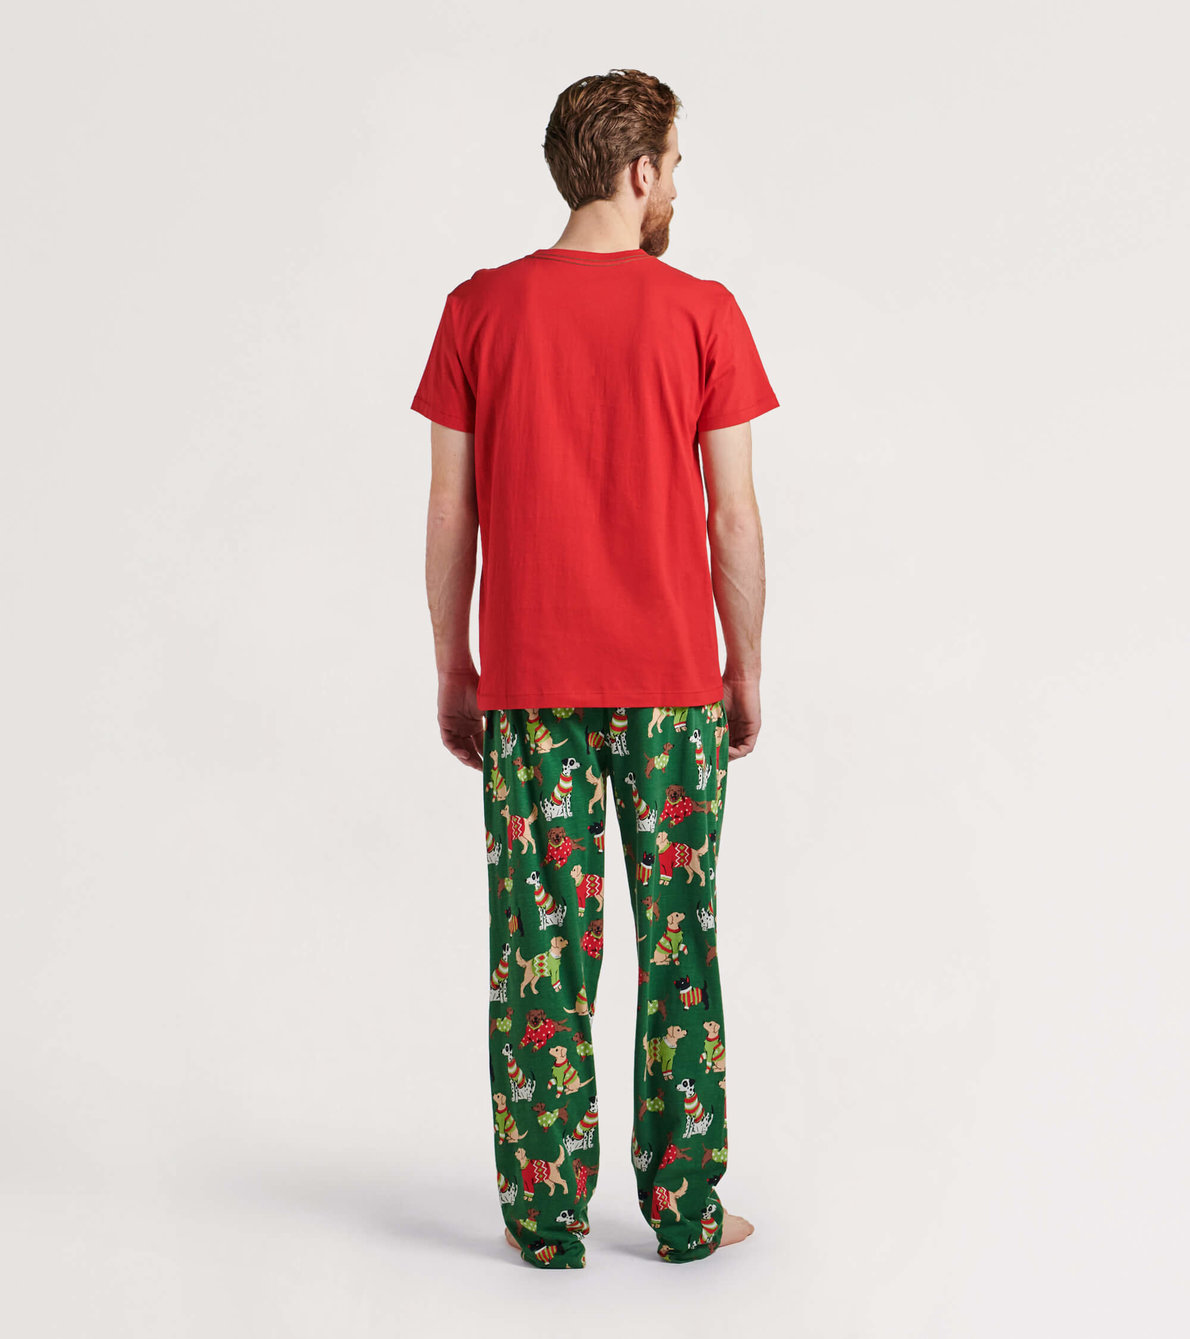 View larger image of Men's Woofing Christmas Pajama Pants